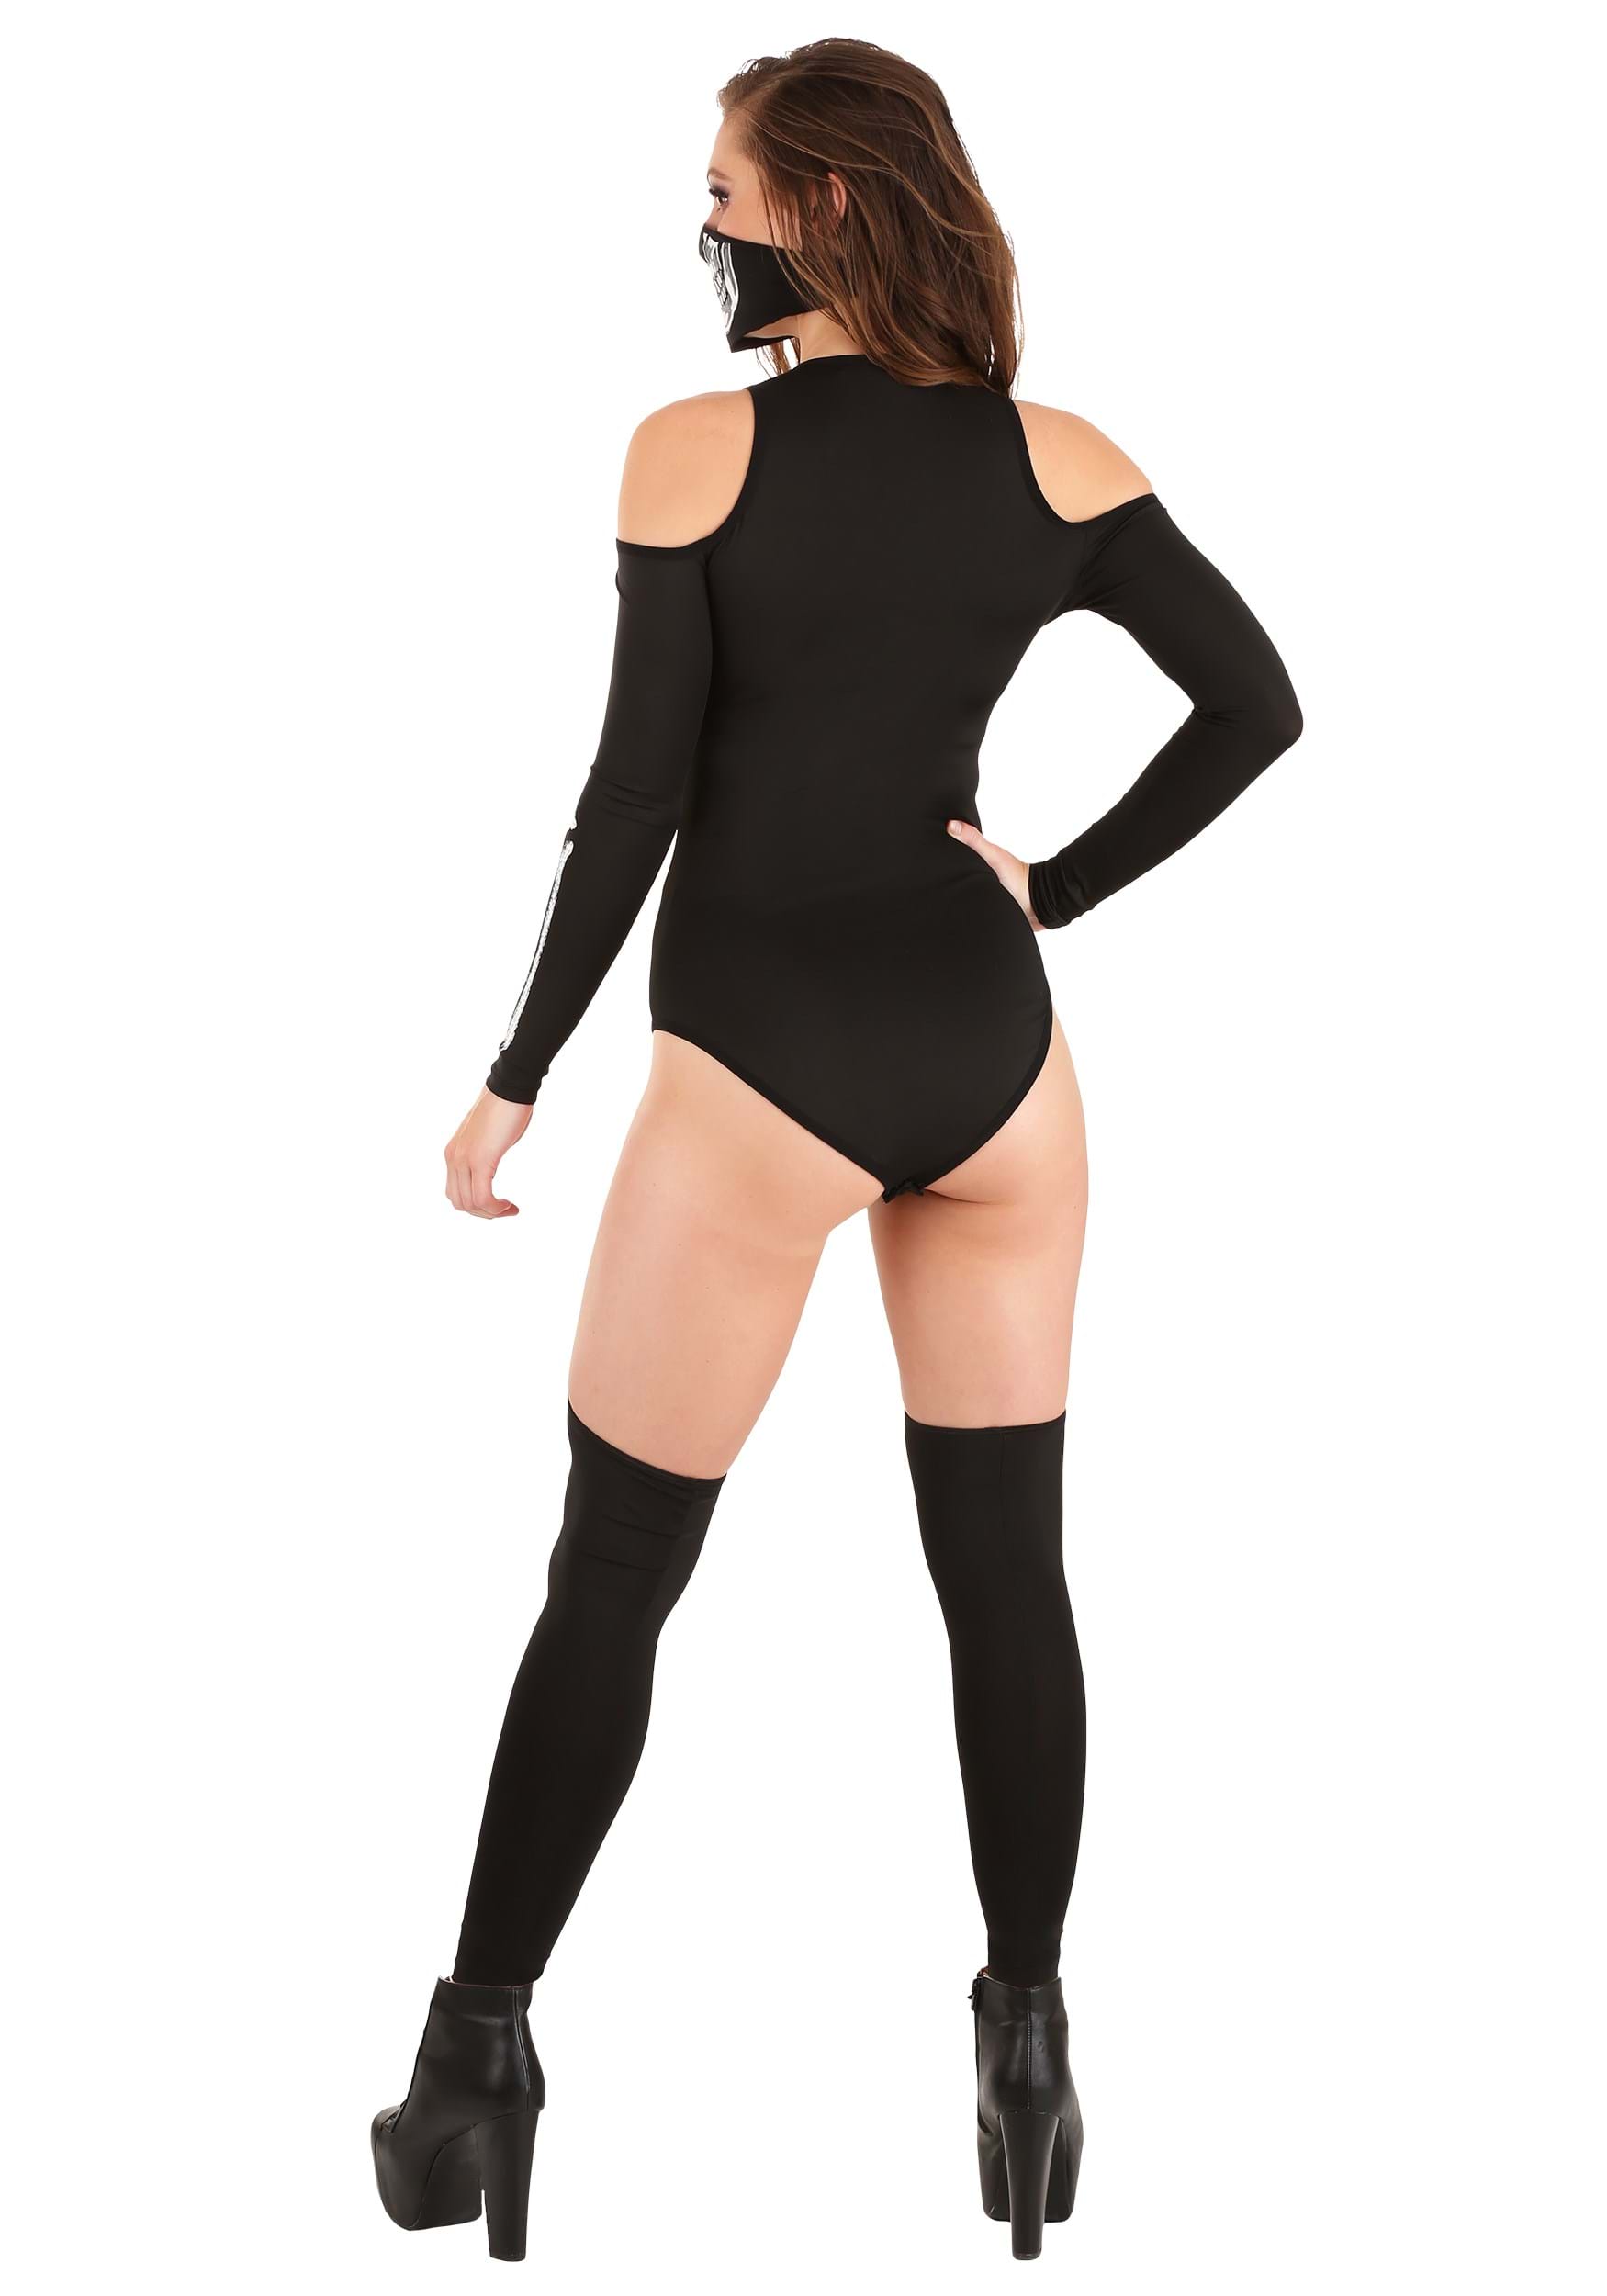 https://images.halloweencostumes.eu/products/46422/2-1-167693/skeleton-bodysuit-womens-costume.jpg